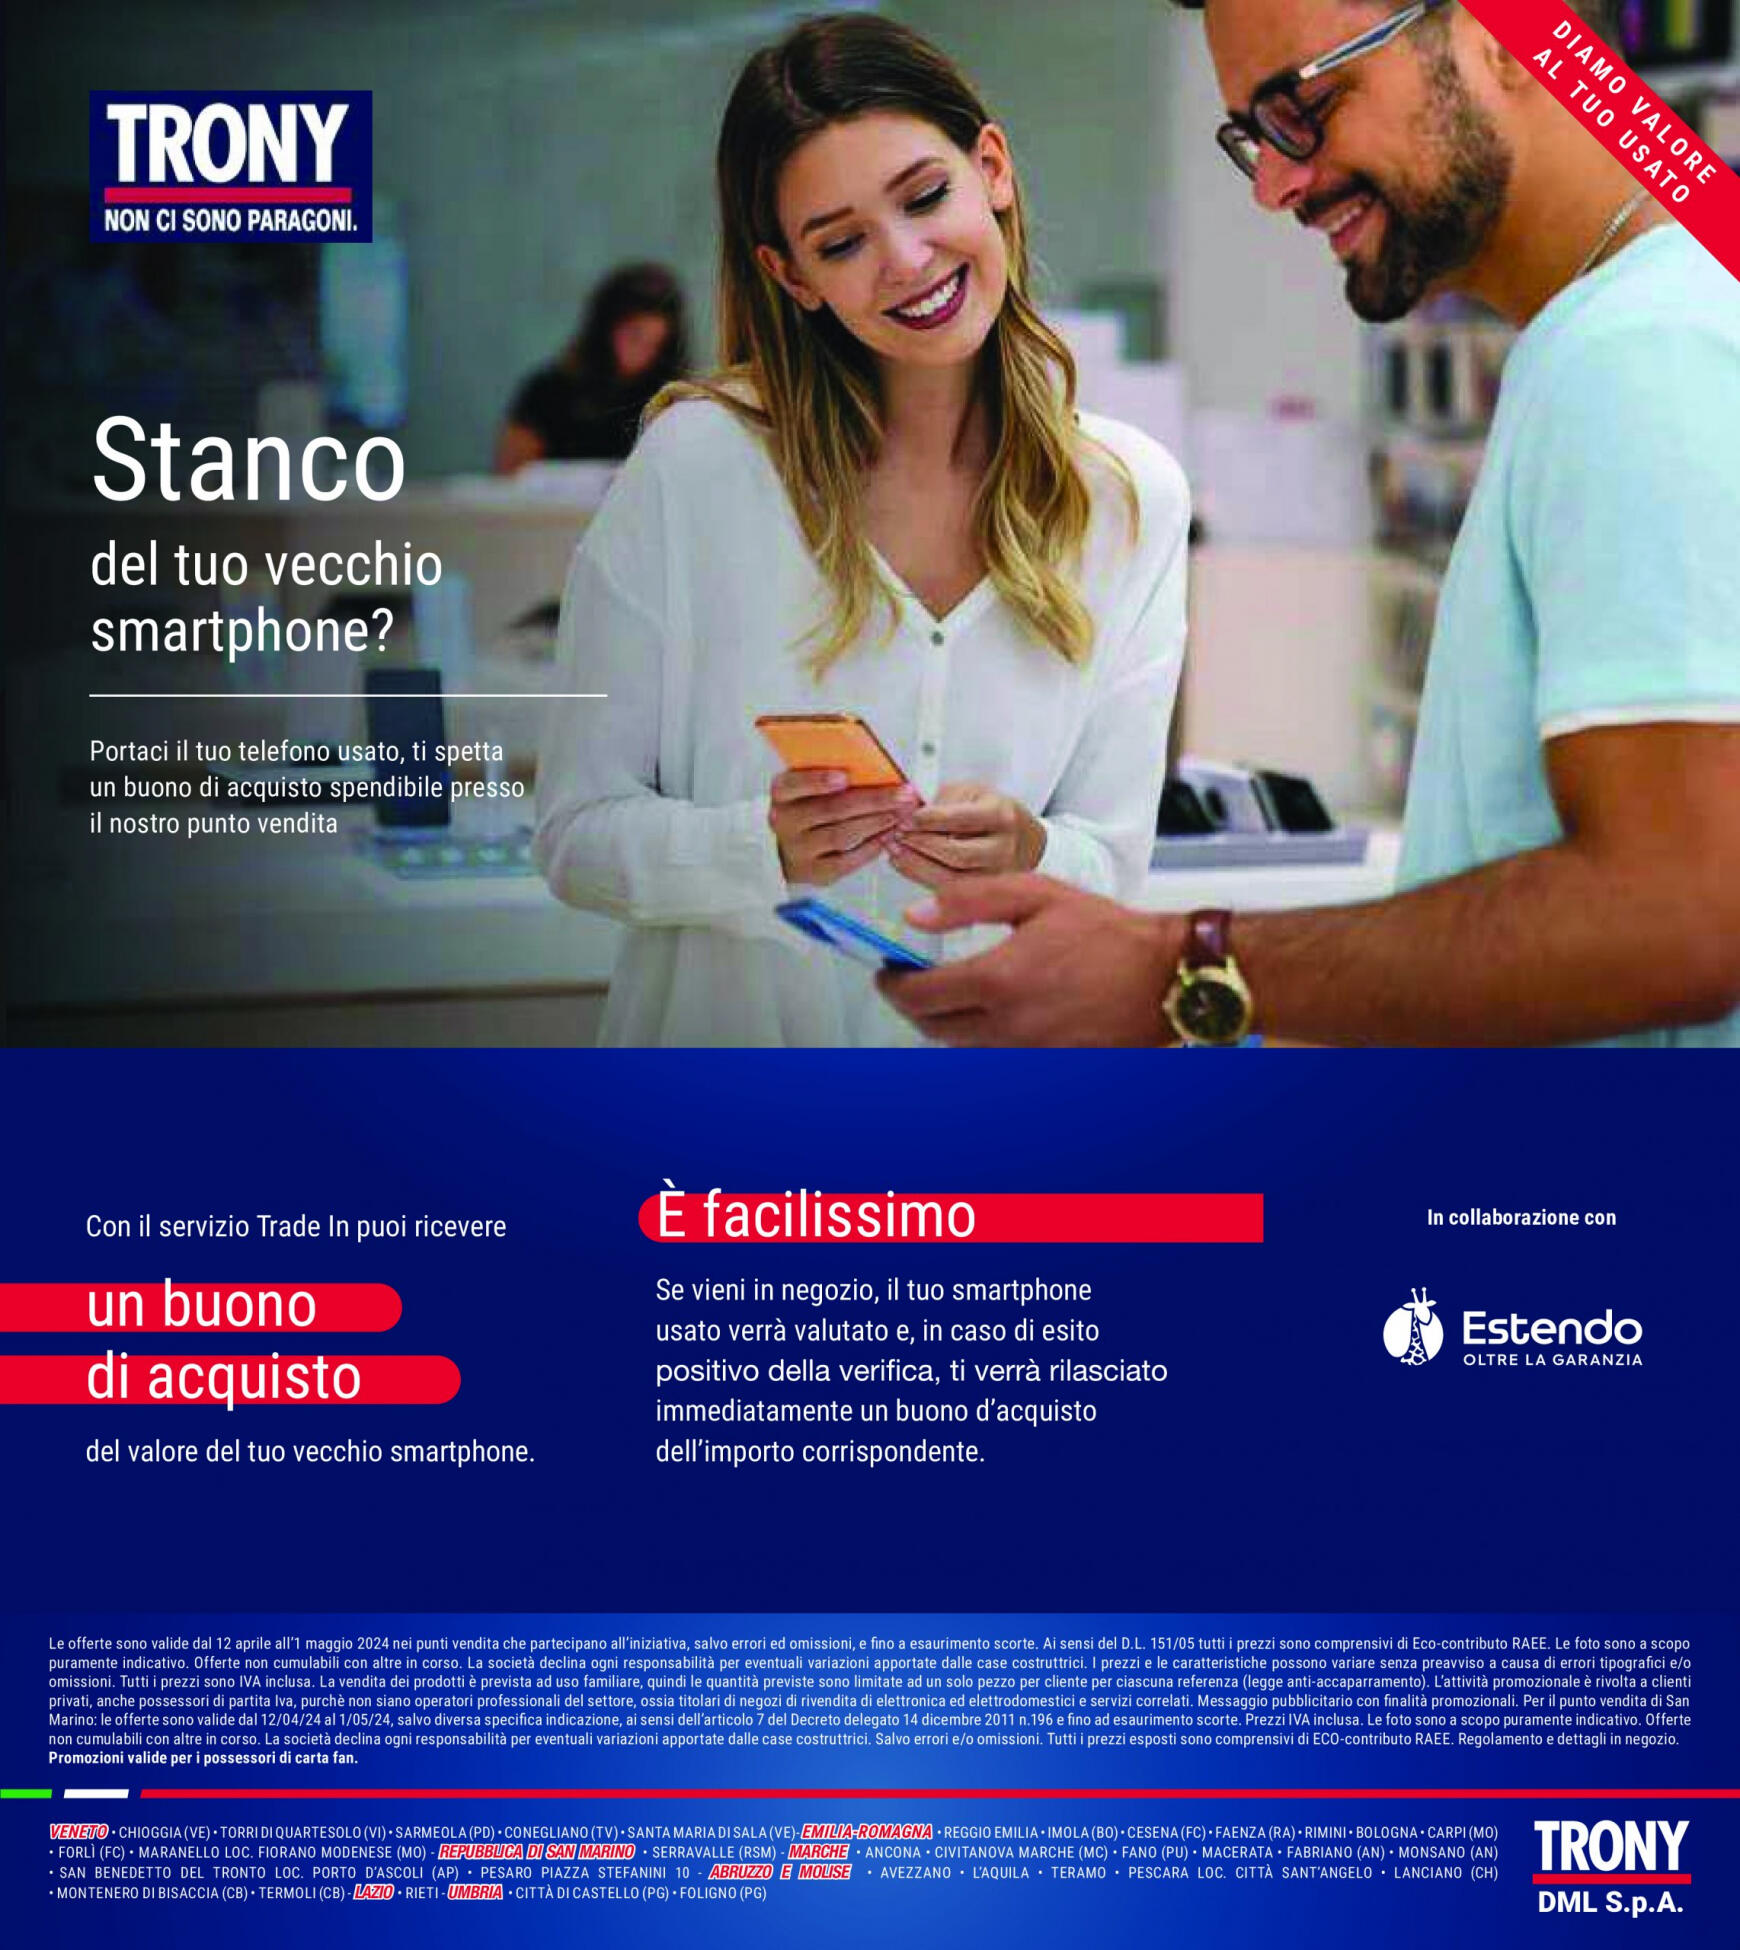 trony - Nuovo volantino Trony 12.04. - 01.05. - page: 51